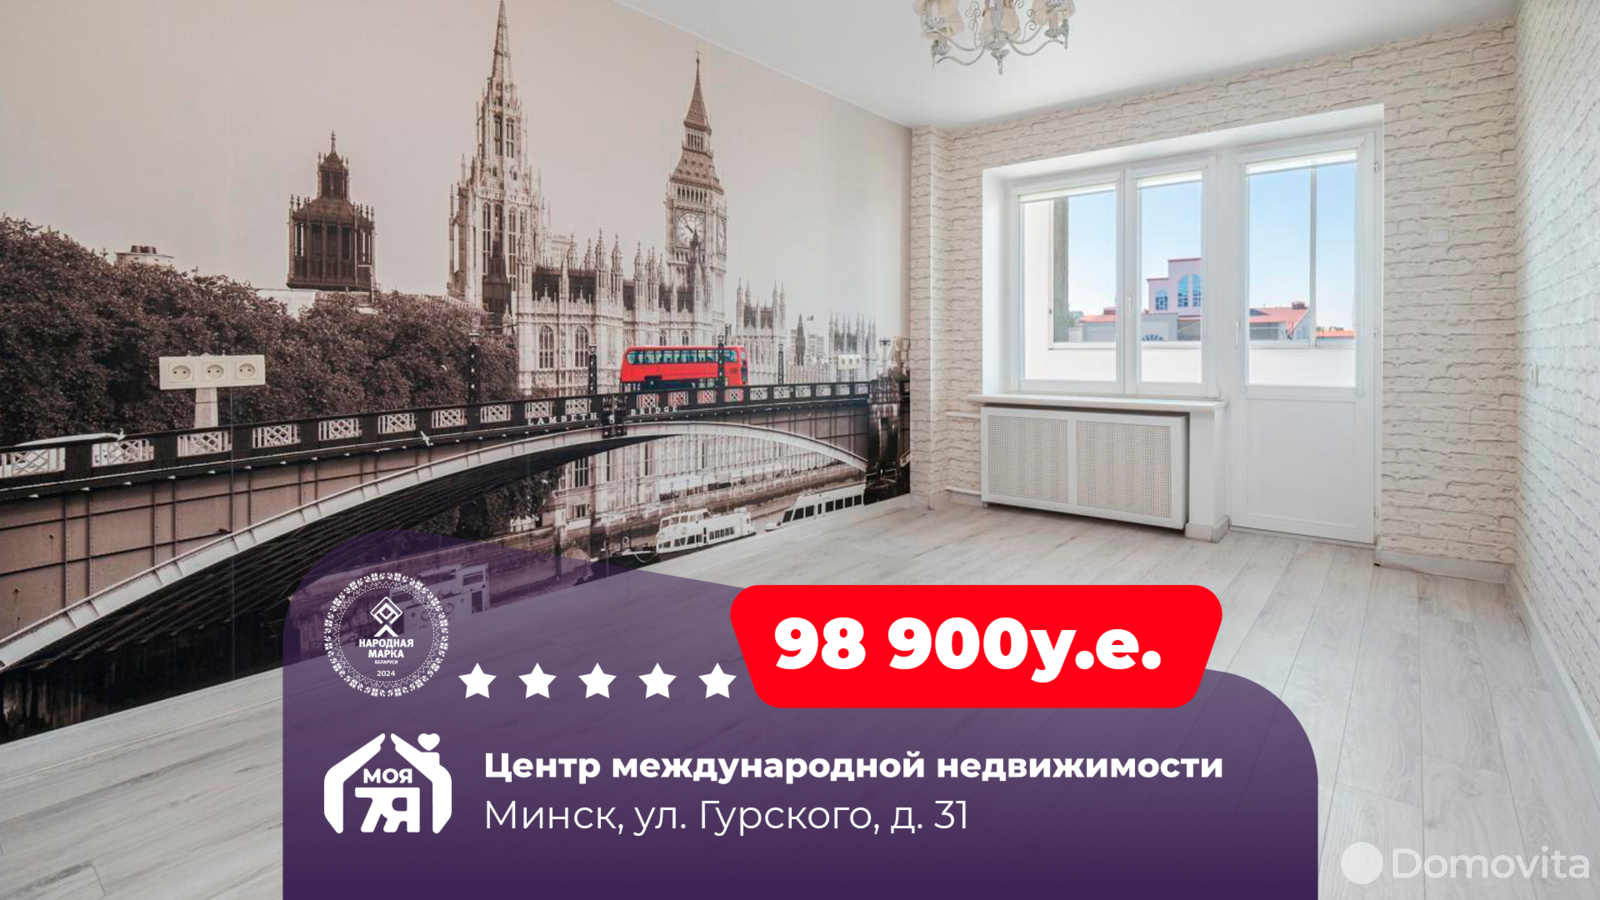 Цена продажи квартиры, Минск, ул. Гурского, д. 31